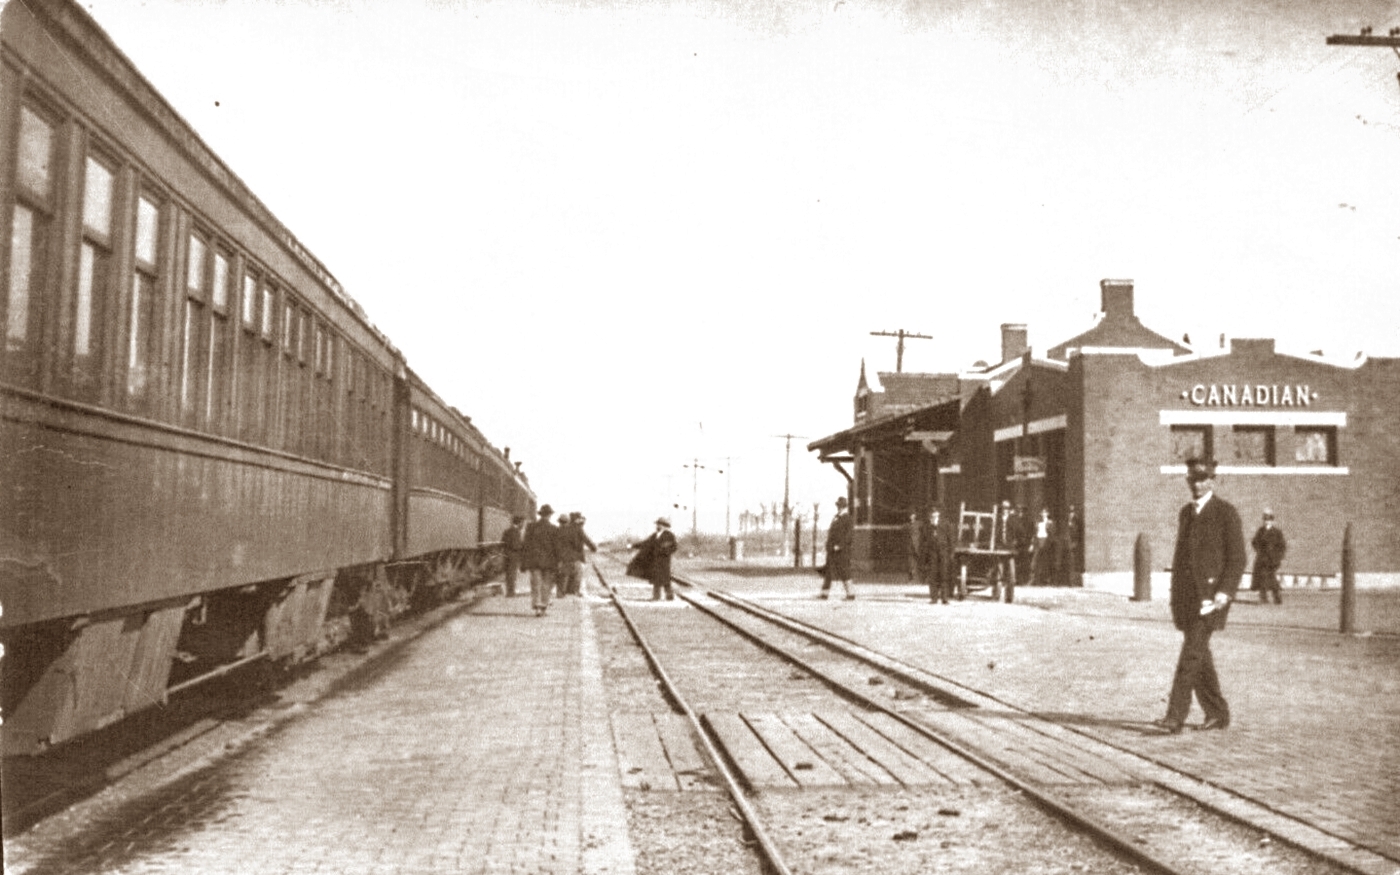 Canadian Texas Railroad Depot in 1890